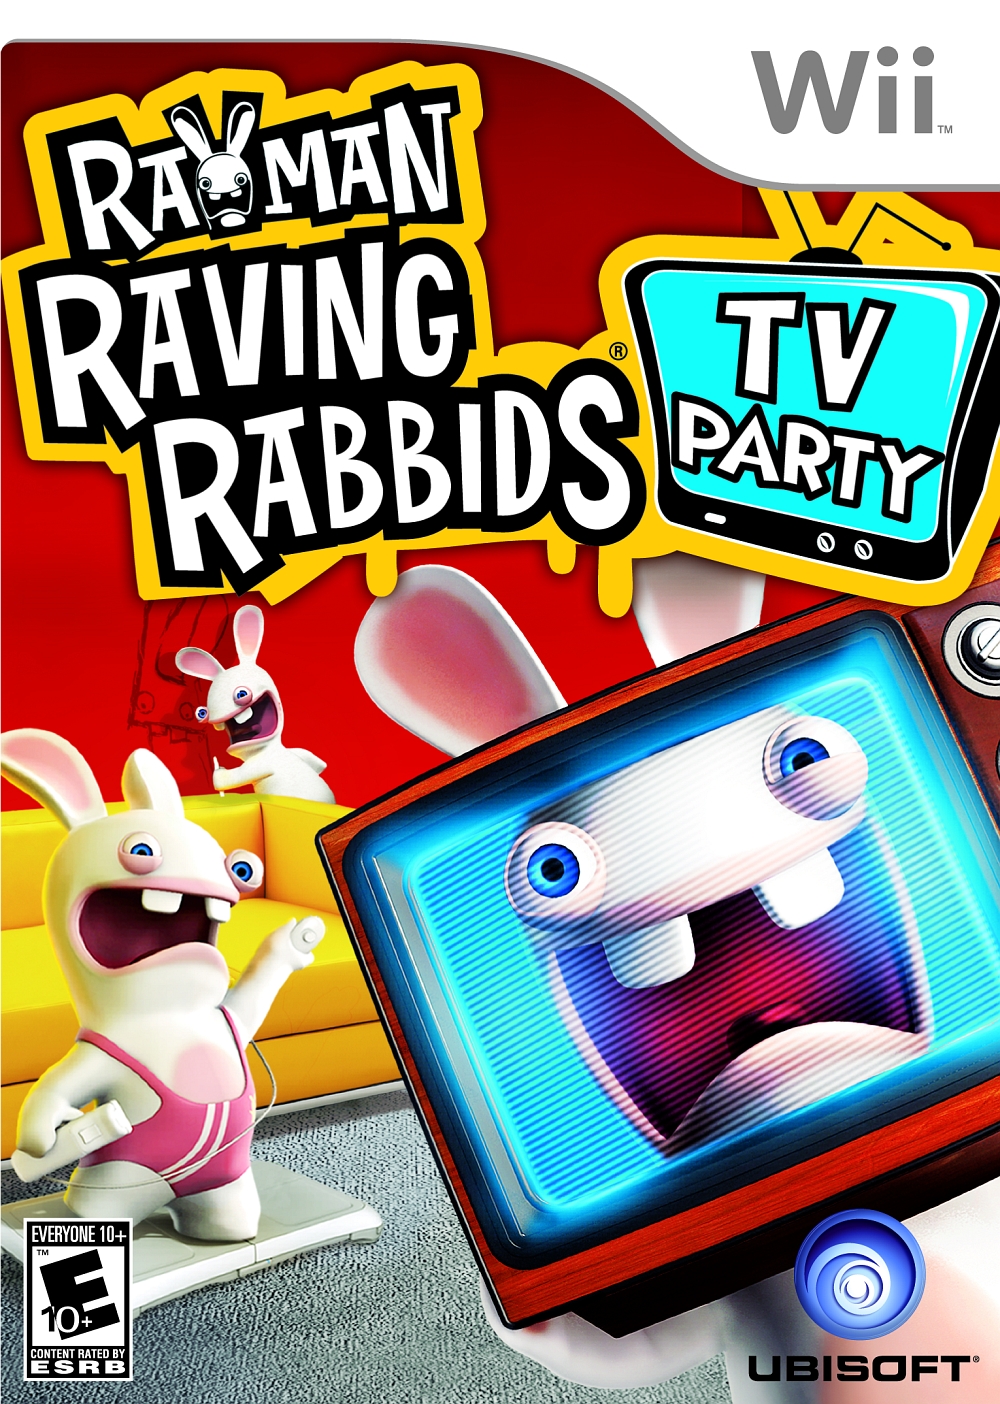 rayman raving rabbids tv party 2 player